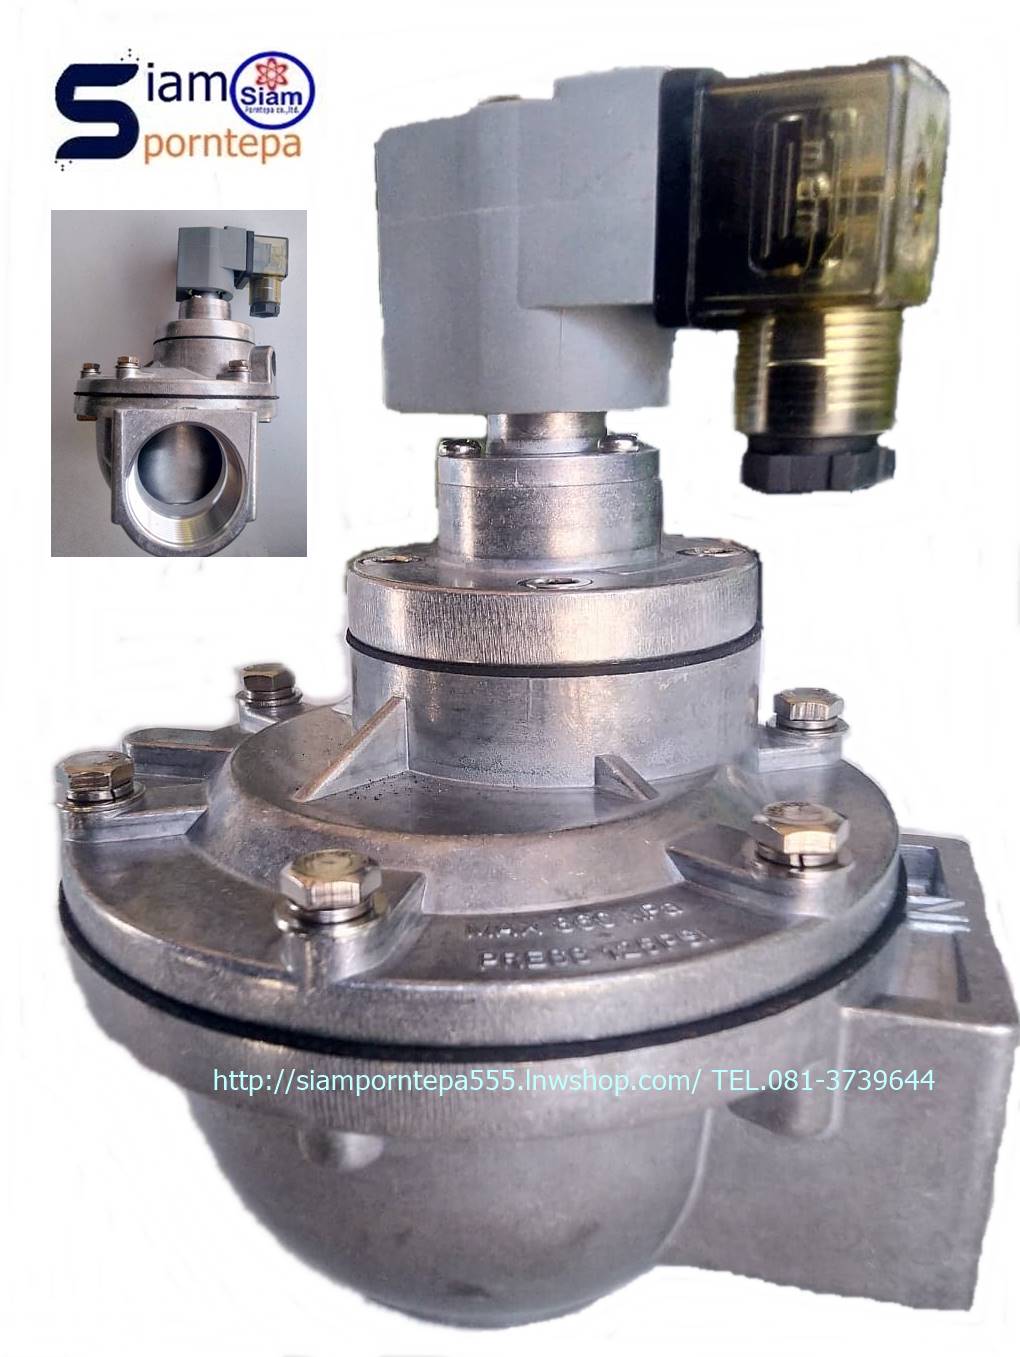 EMCF-76-24DC Pulse valve size 3" วาล์วกระทุ้งฝุ่น วาล์วกระแทกฝุ่น ไฟ 24DC Pressure 0-9 bar 